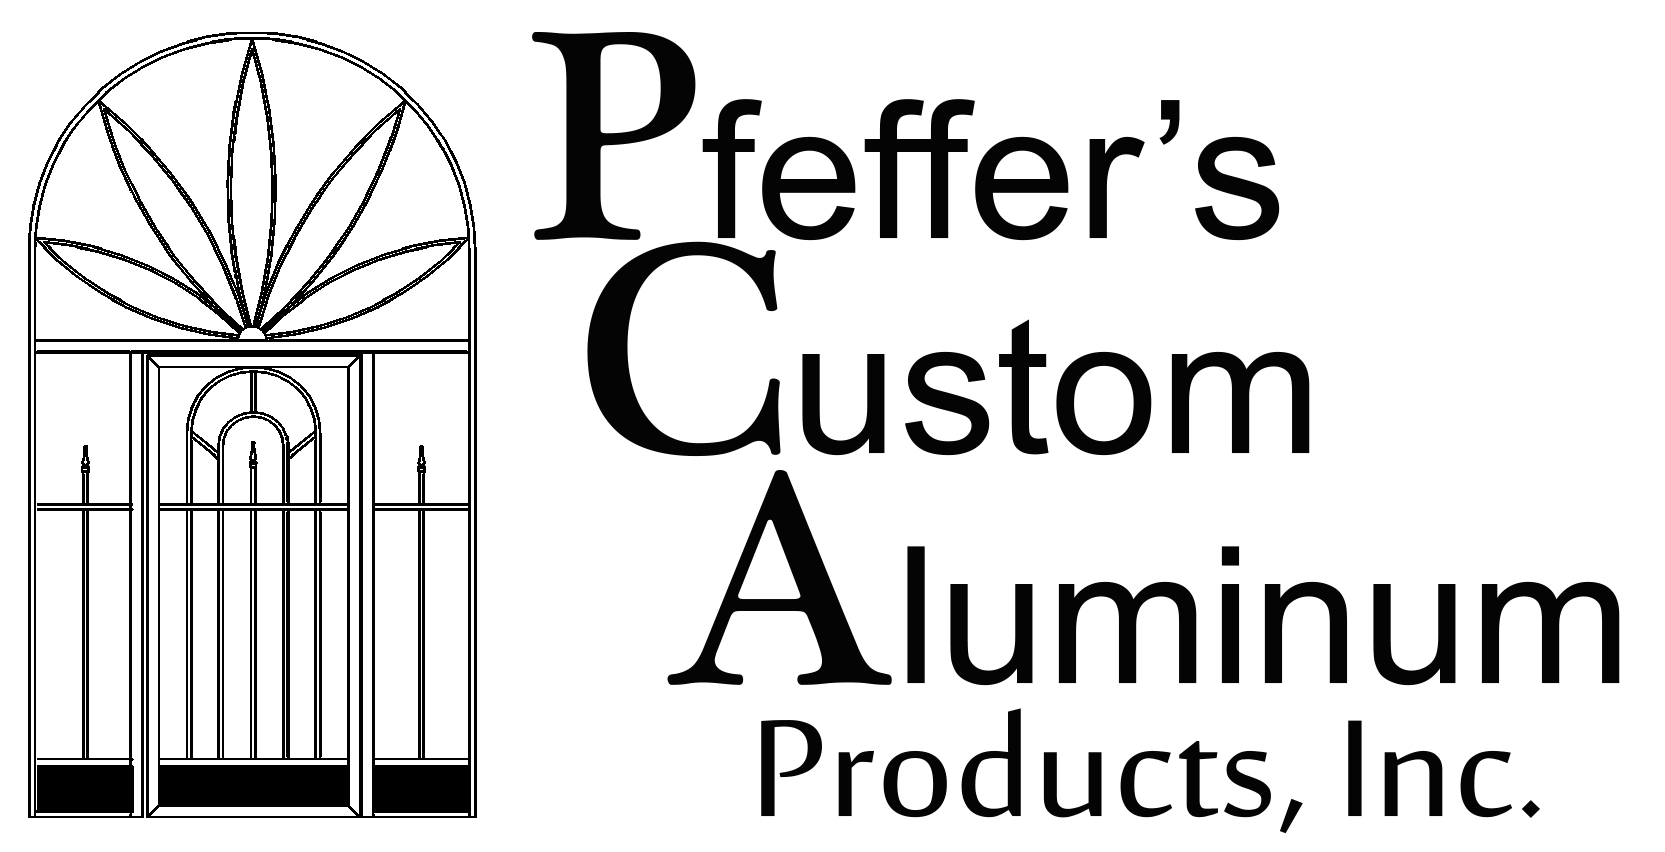 Pfeffer-logo_whbk.png?mtime=20200211110046#asset:17956